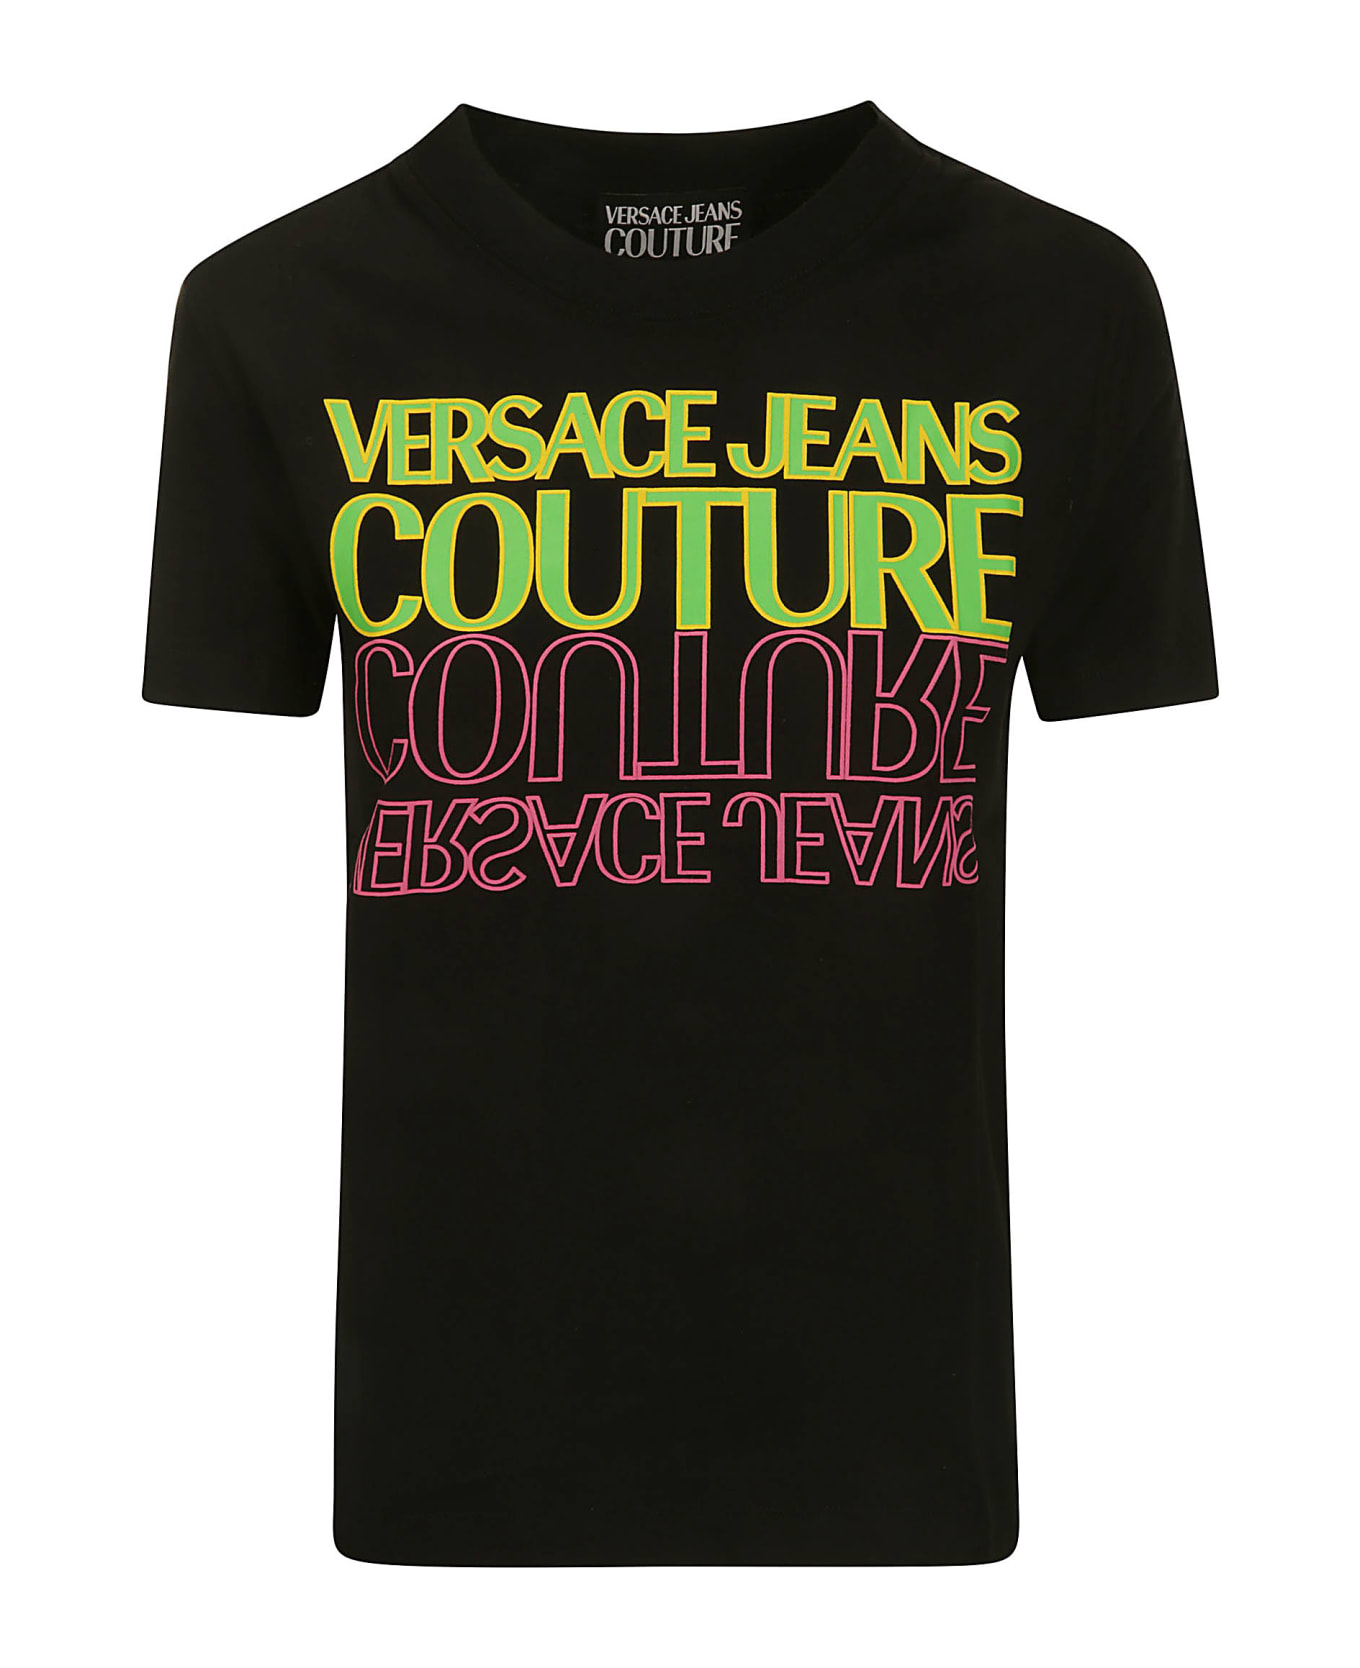 Versace Jeans Couture Upside Down C T-shirt - BLACK